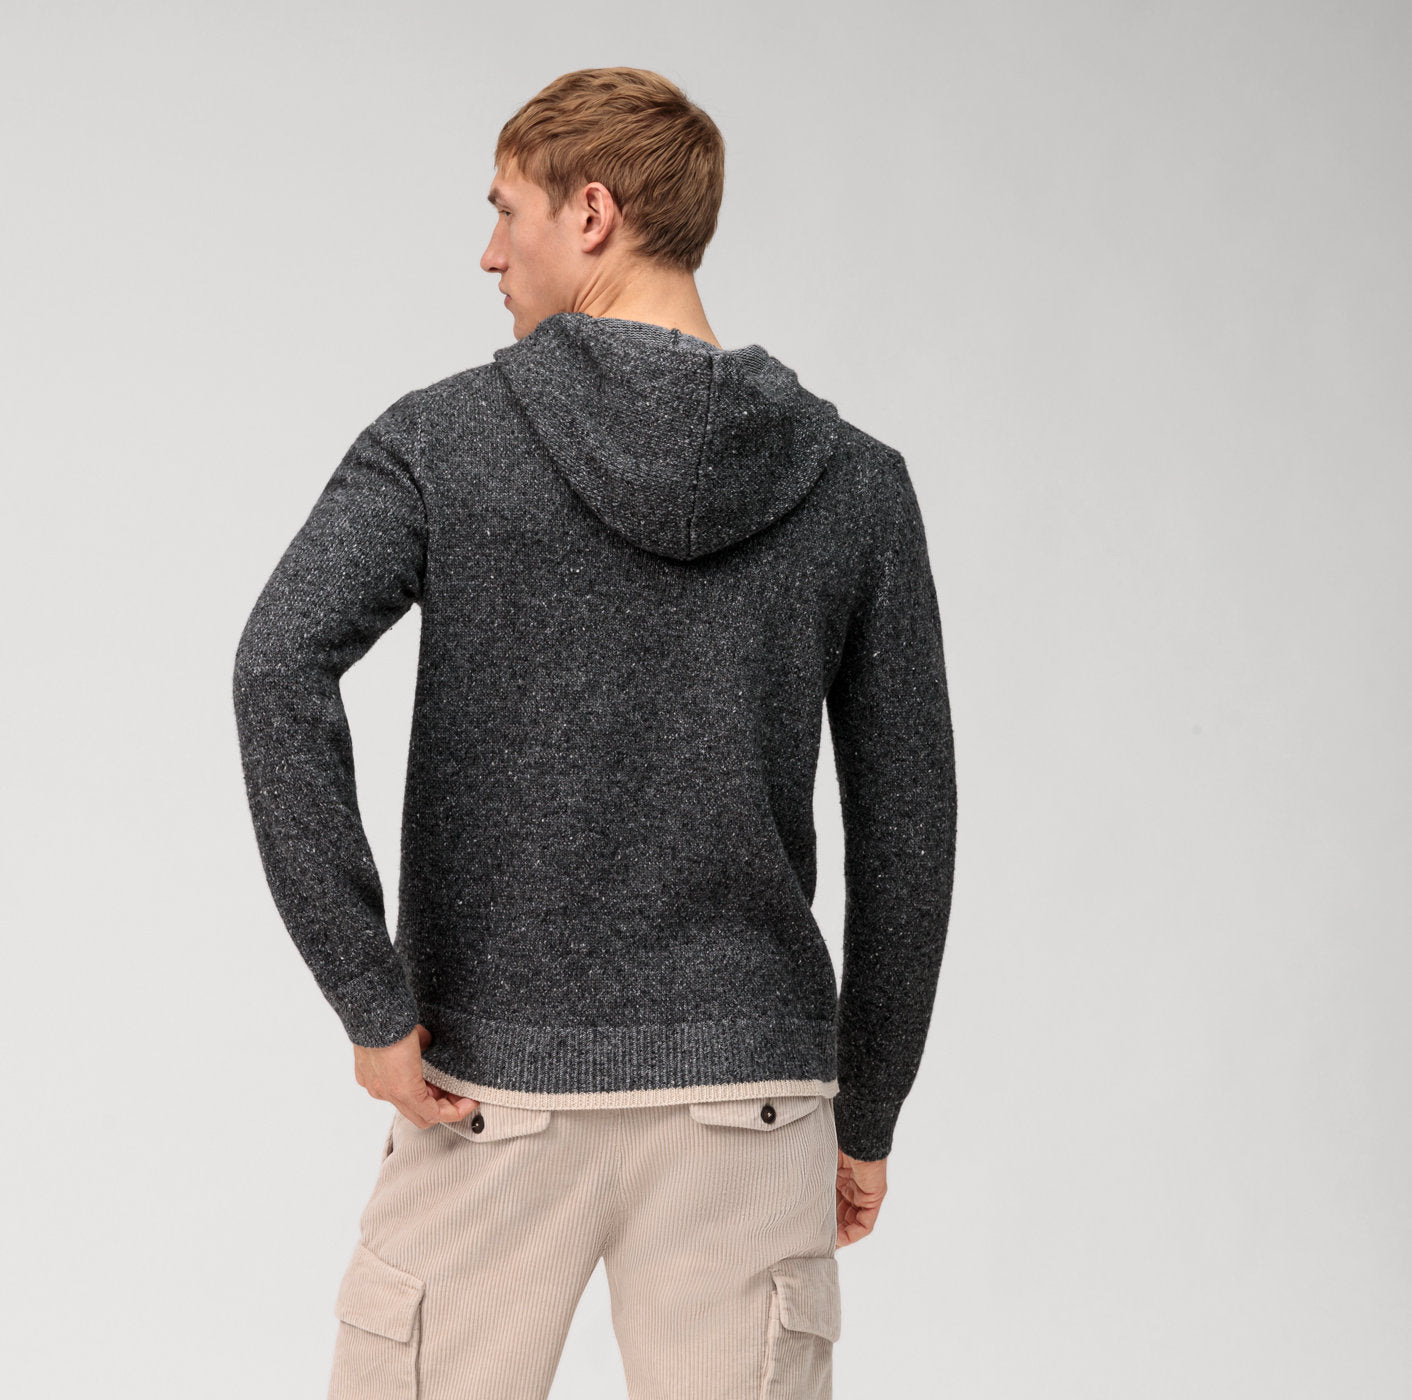 Sweatshirt à capuche - Gris - Fully Fashioned - Casual